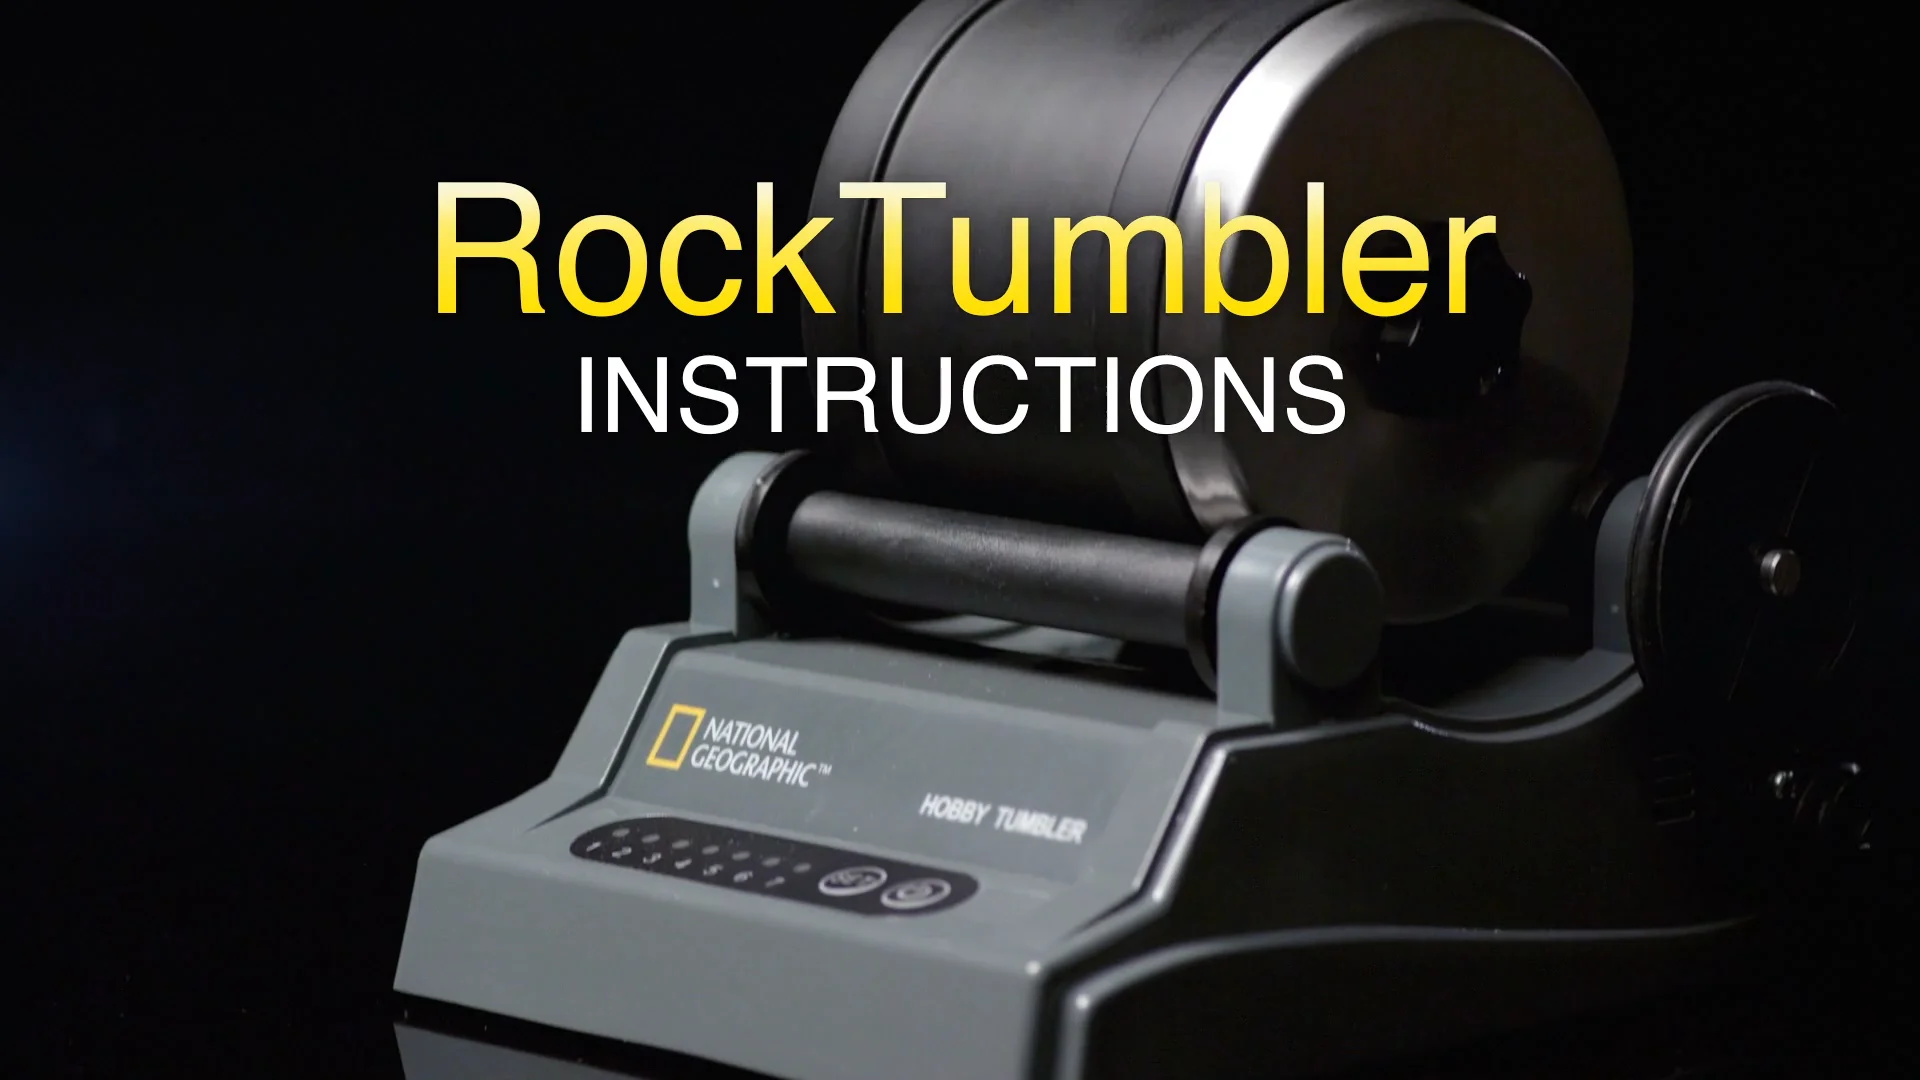 National Geographic Hobby Rock Tumbler Kit